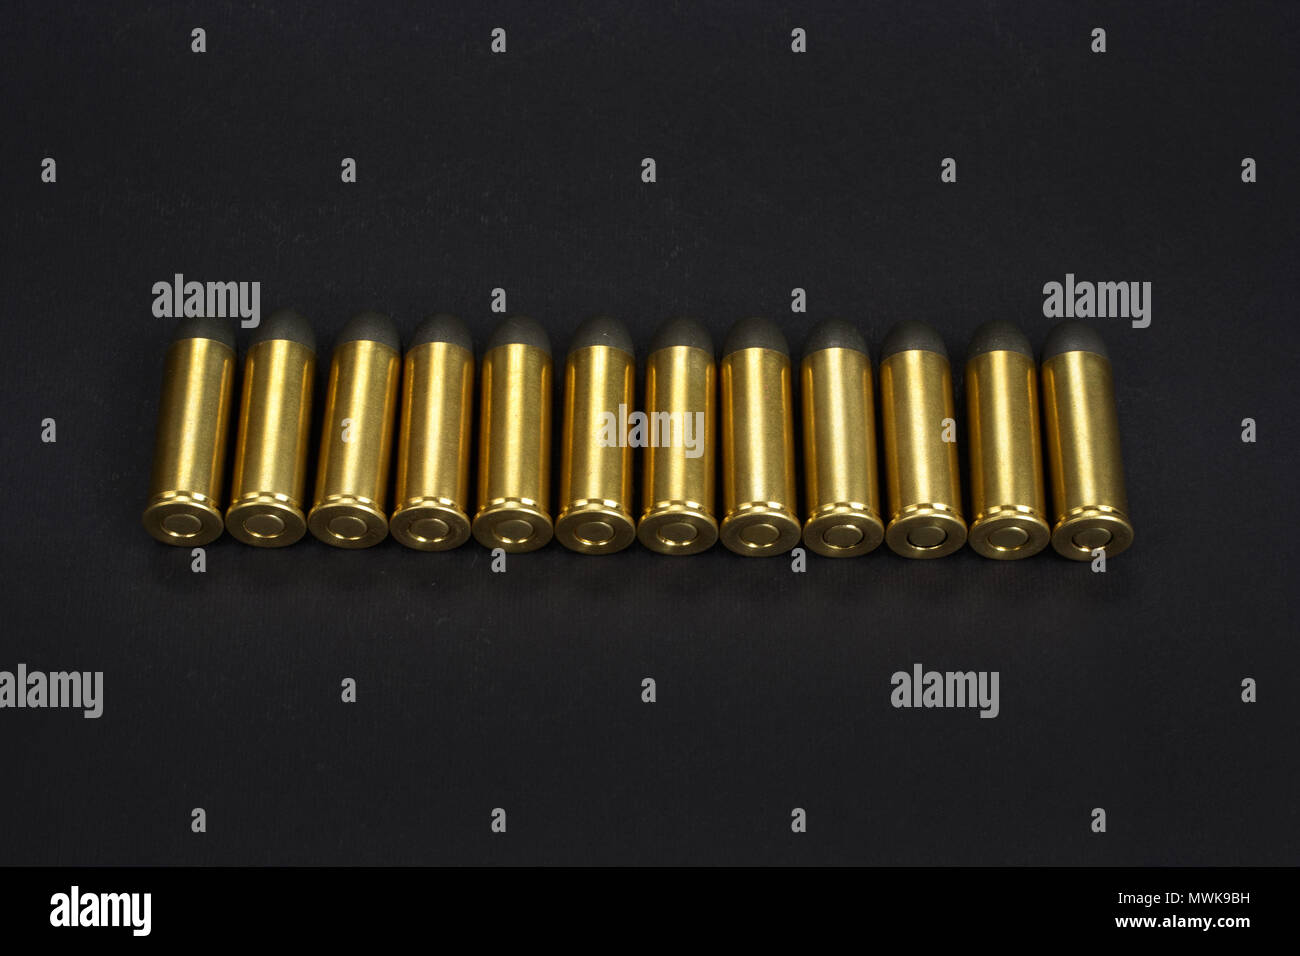 The 45 Caliber Revolver Cartridges On Black Background Stock Photo Alamy